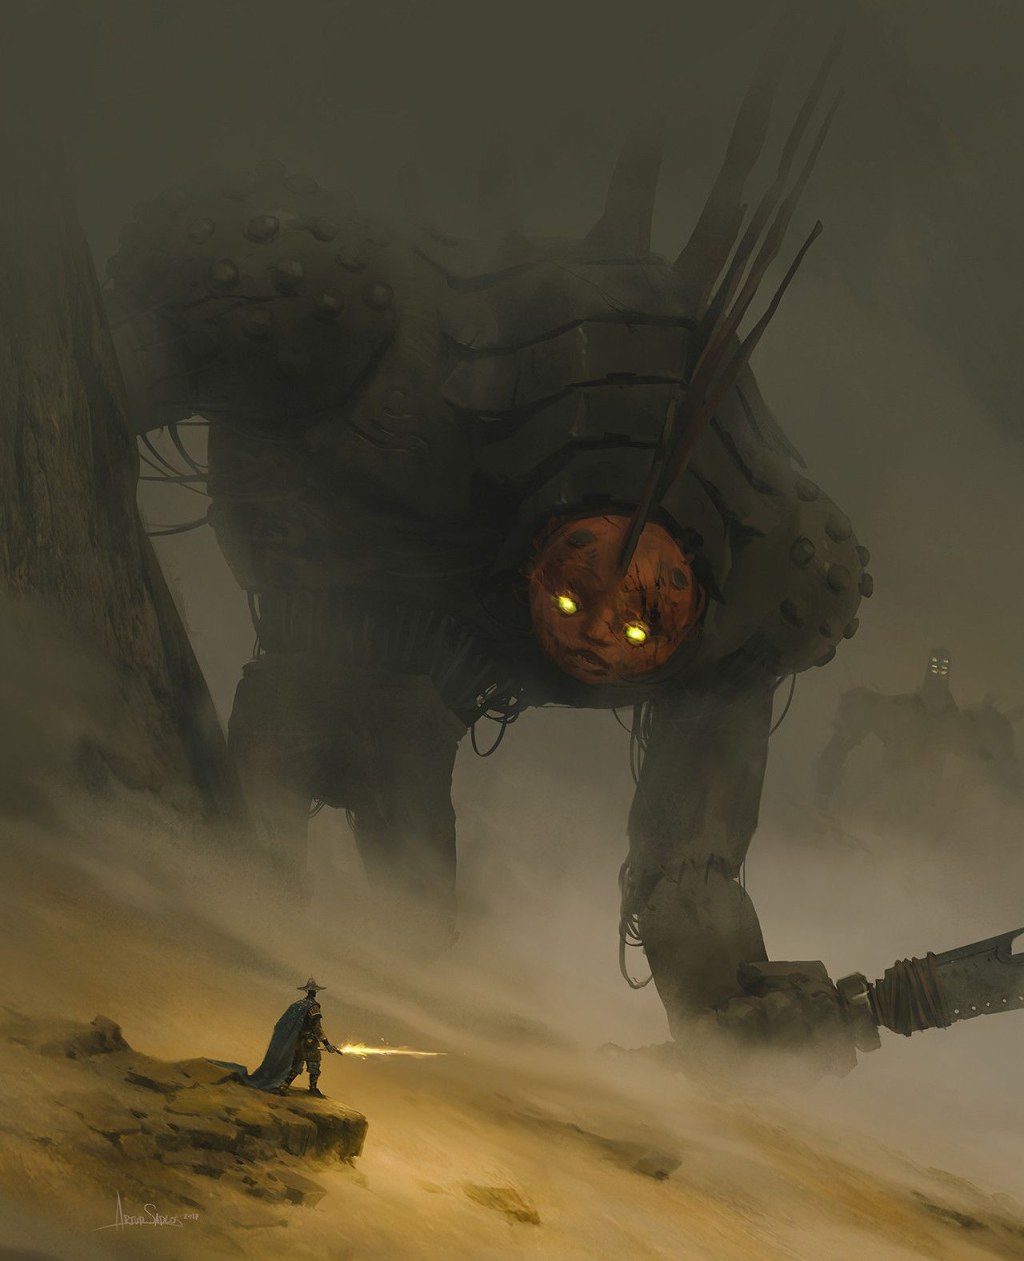 giant monster concept art - Wooden Giant (The Mooeti) by Artur Sadlos - Conceptverse Studio